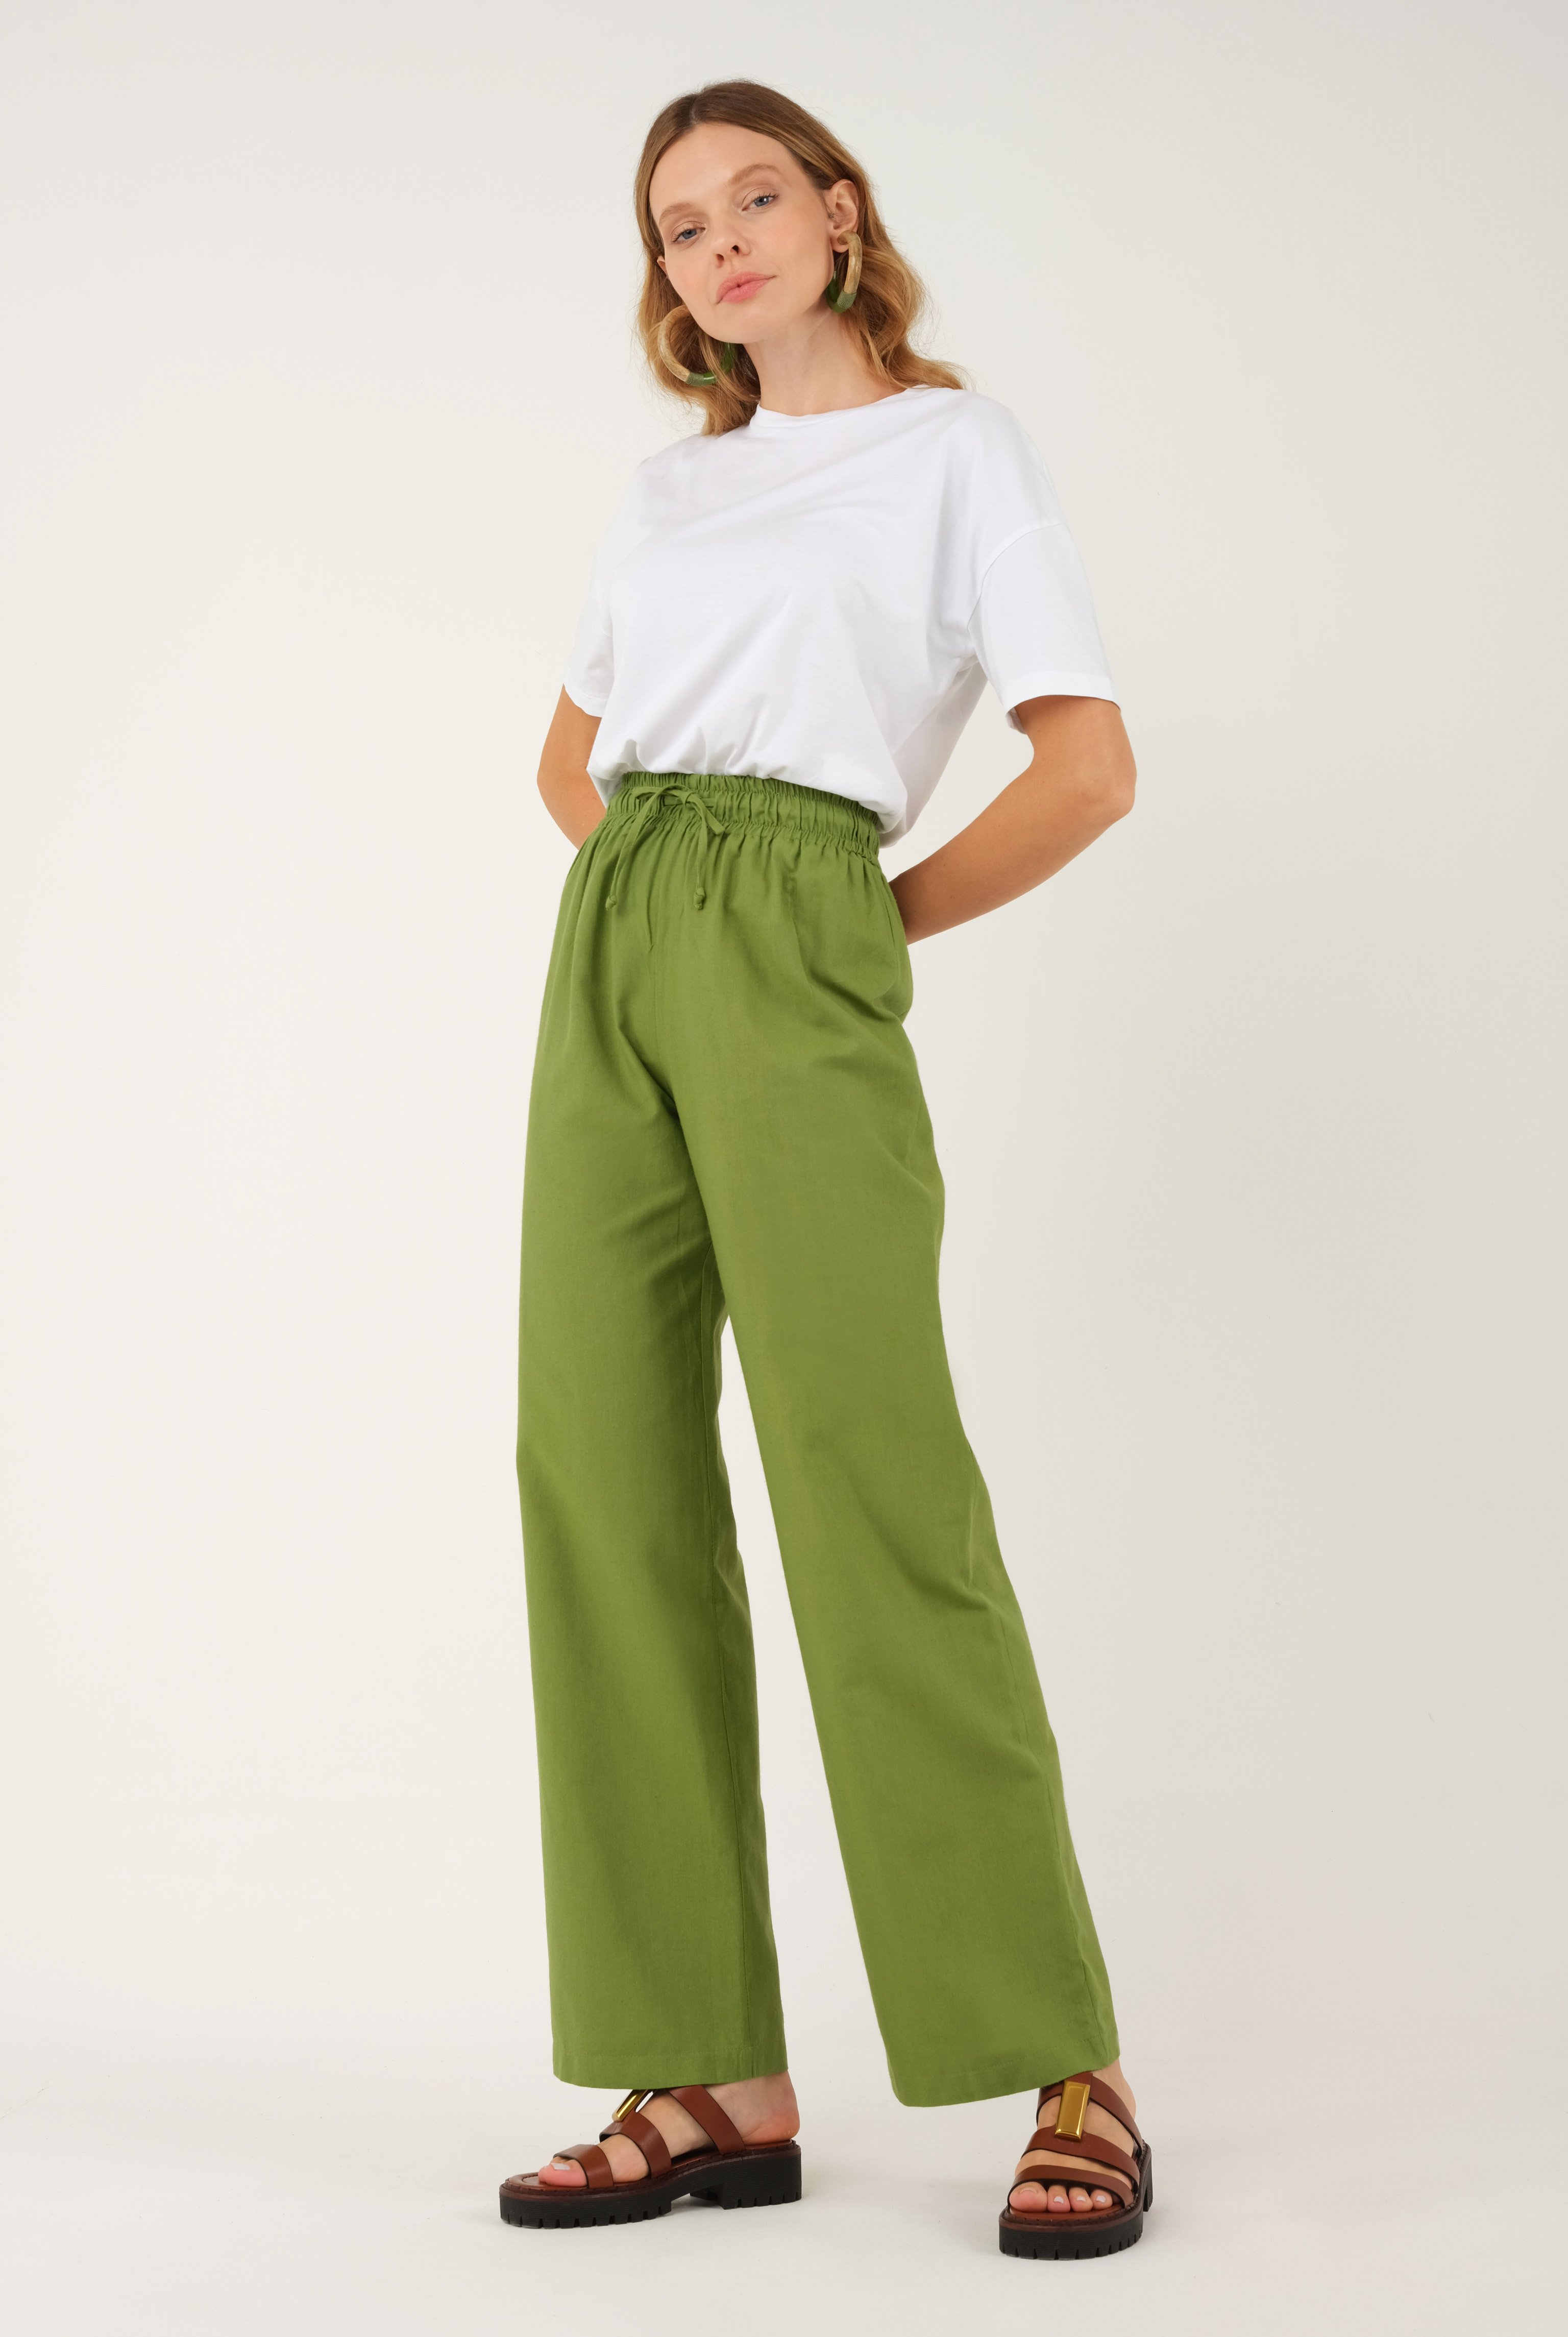 Natural Pantolon Fıstık Yeşili